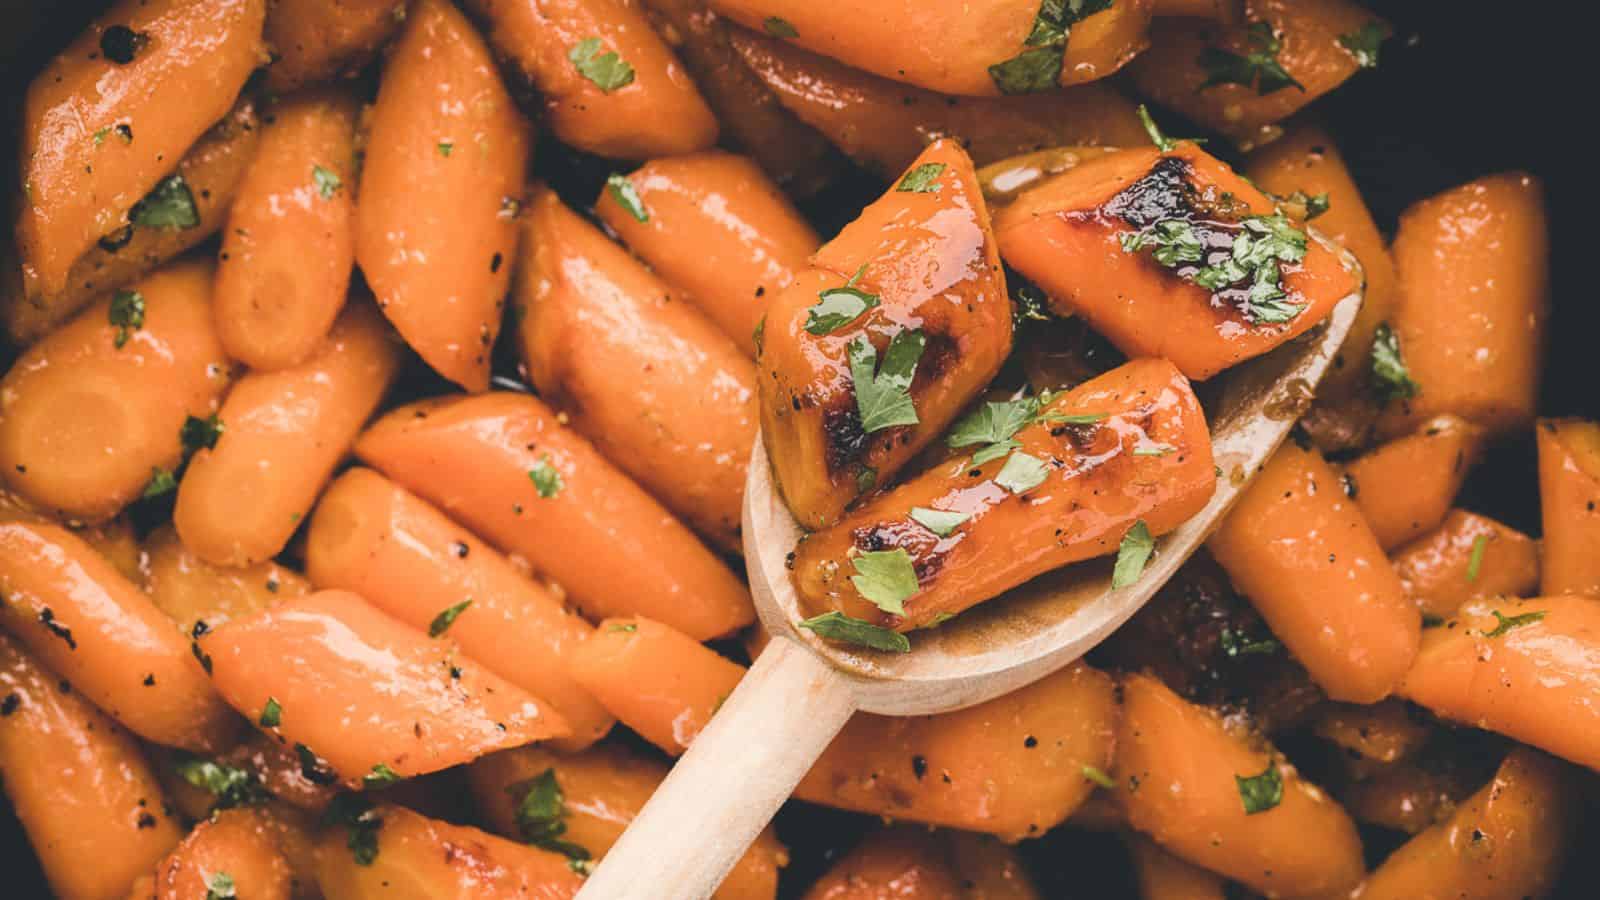 Honey garlic carrots in a black dish.